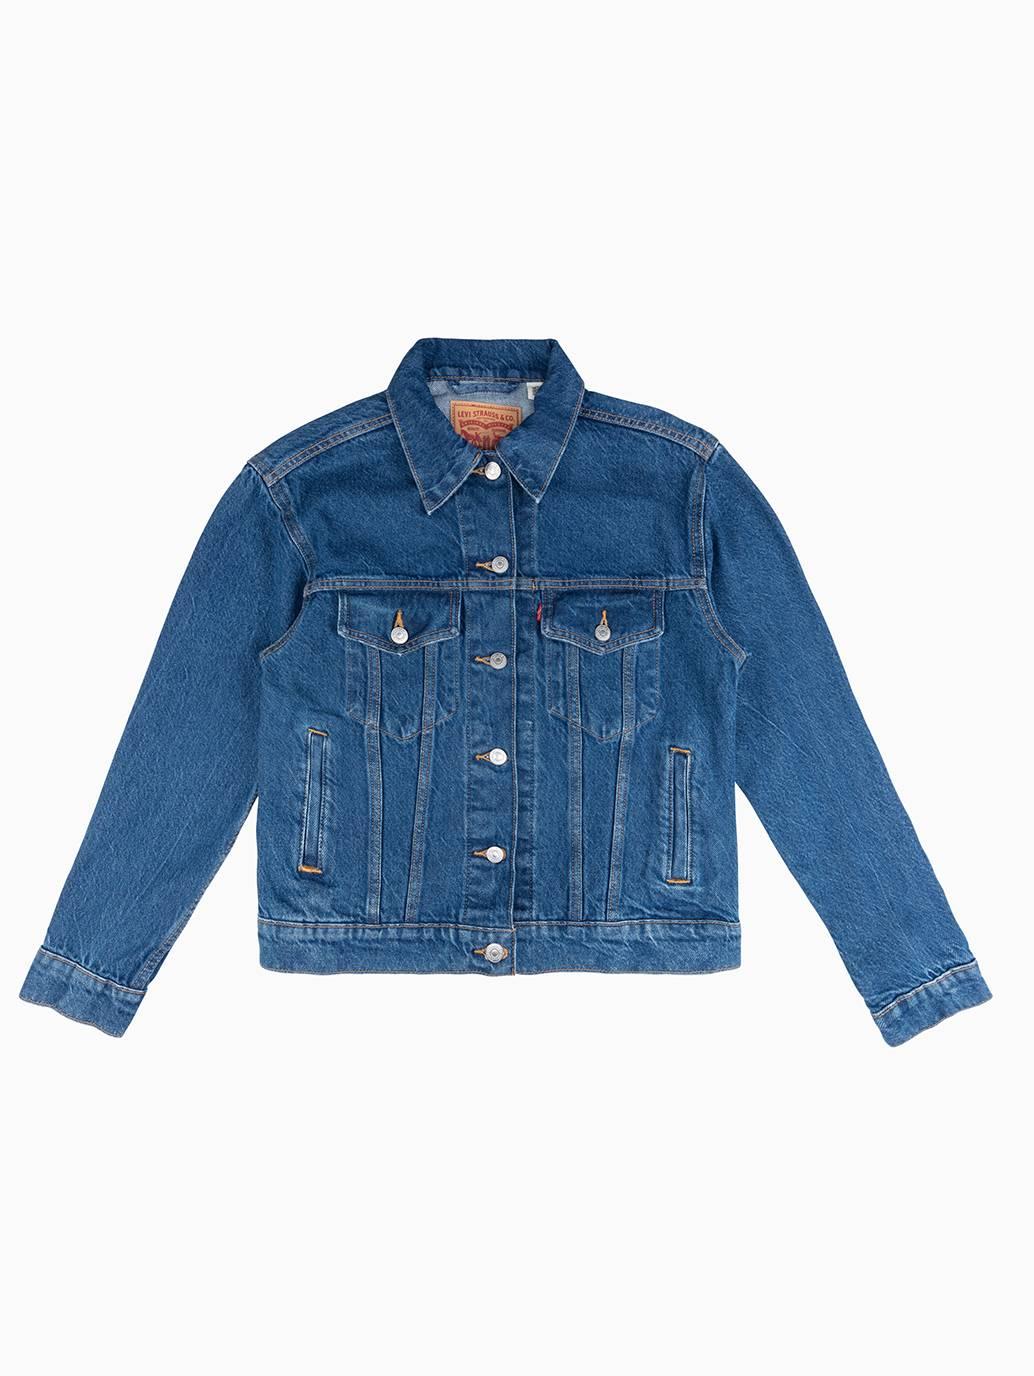 Buy Ex-Boyfriend Trucker Jacket | Levi’s® Official Online Store PH